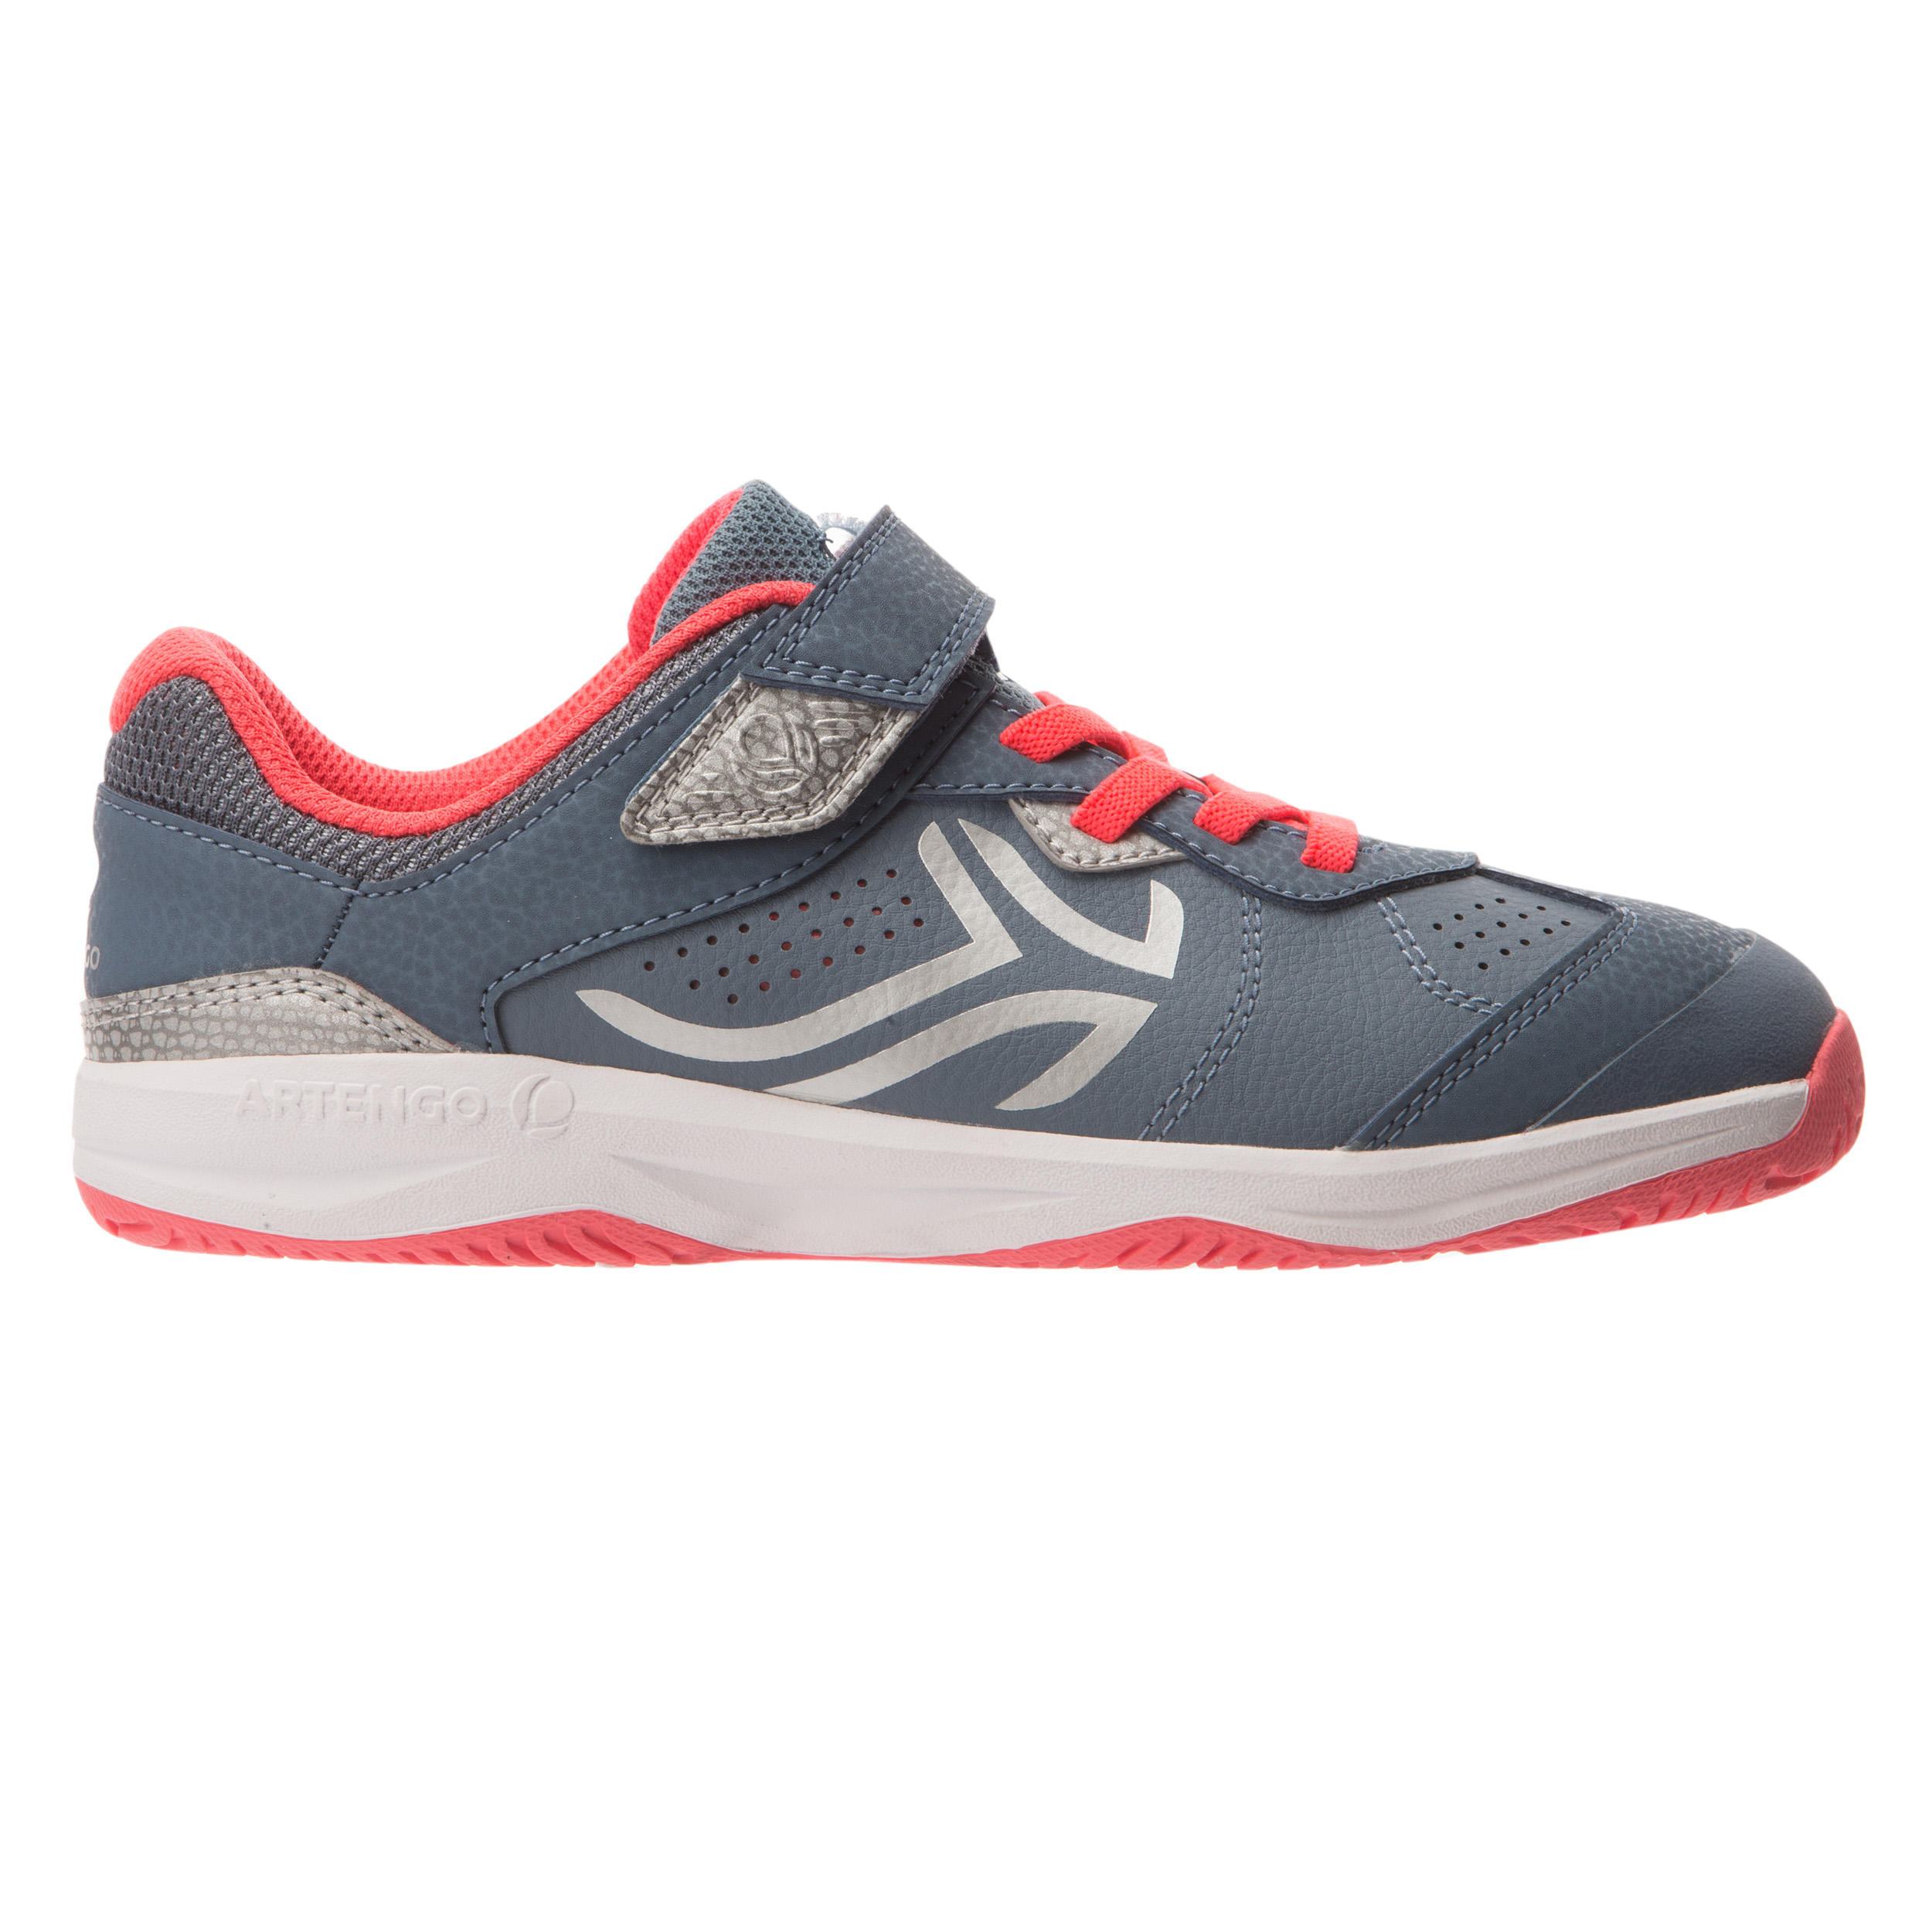 DECATHLON TS760 Kids' Tennis Shoes - Grey/Pink